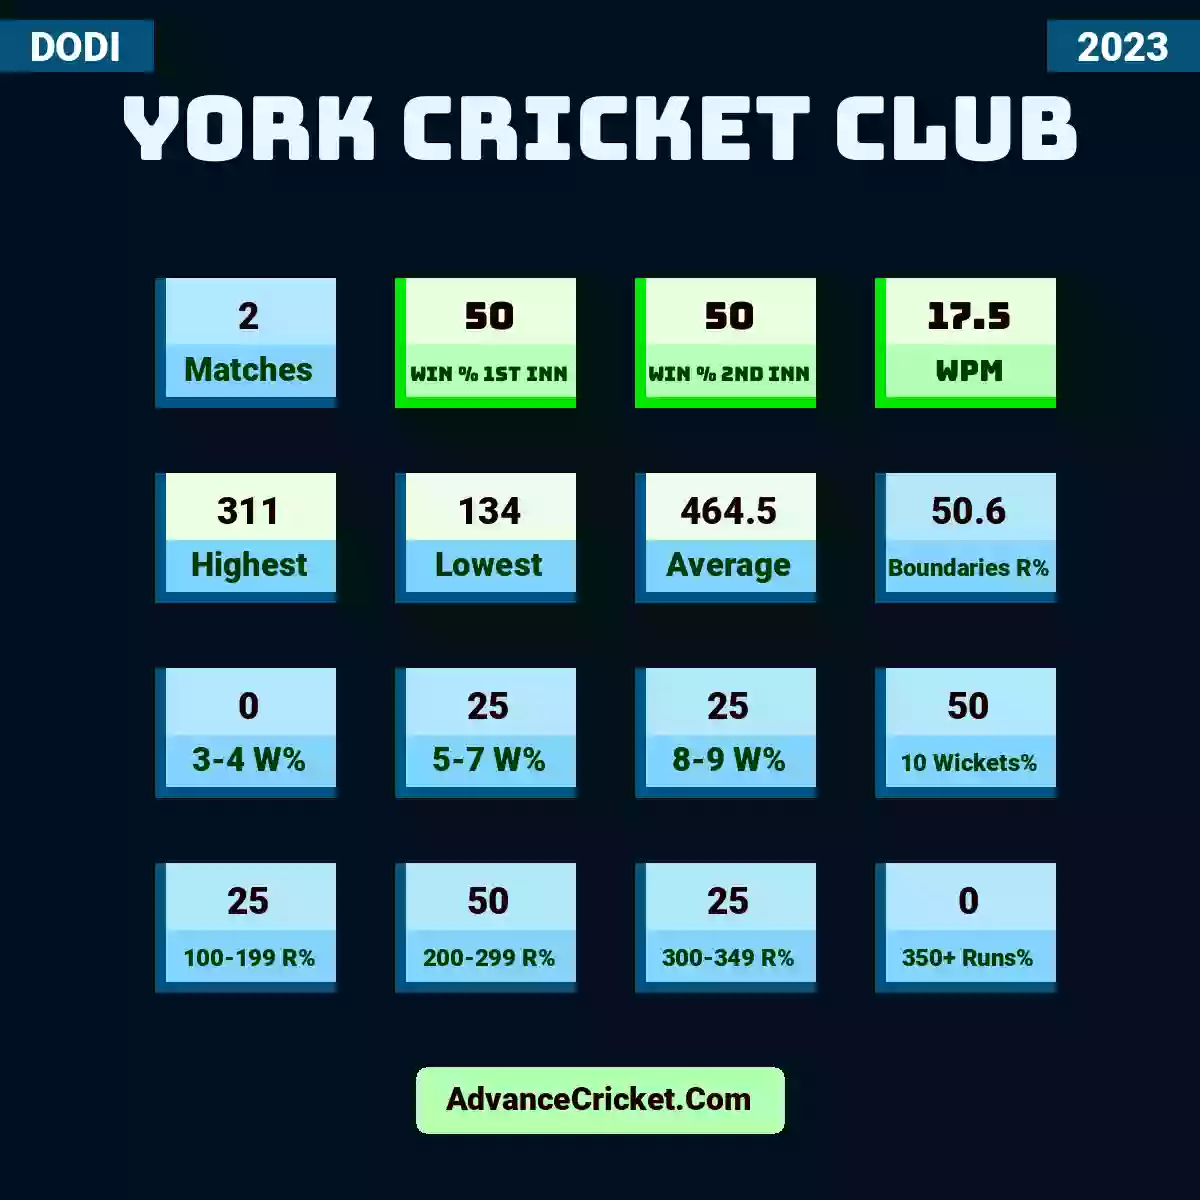 Image showing York Cricket Club with Matches: 2, Win % 1st Inn: 50, Win % 2nd Inn: 50, WPM: 17.5, Highest: 311, Lowest: 134, Average: 464.5, Boundaries R%: 50.6, 3-4 W%: 0, 5-7 W%: 25, 8-9 W%: 25, 10 Wickets%: 50, 100-199 R%: 25, 200-299 R%: 50, 300-349 R%: 25, 350+ Runs%: 0.